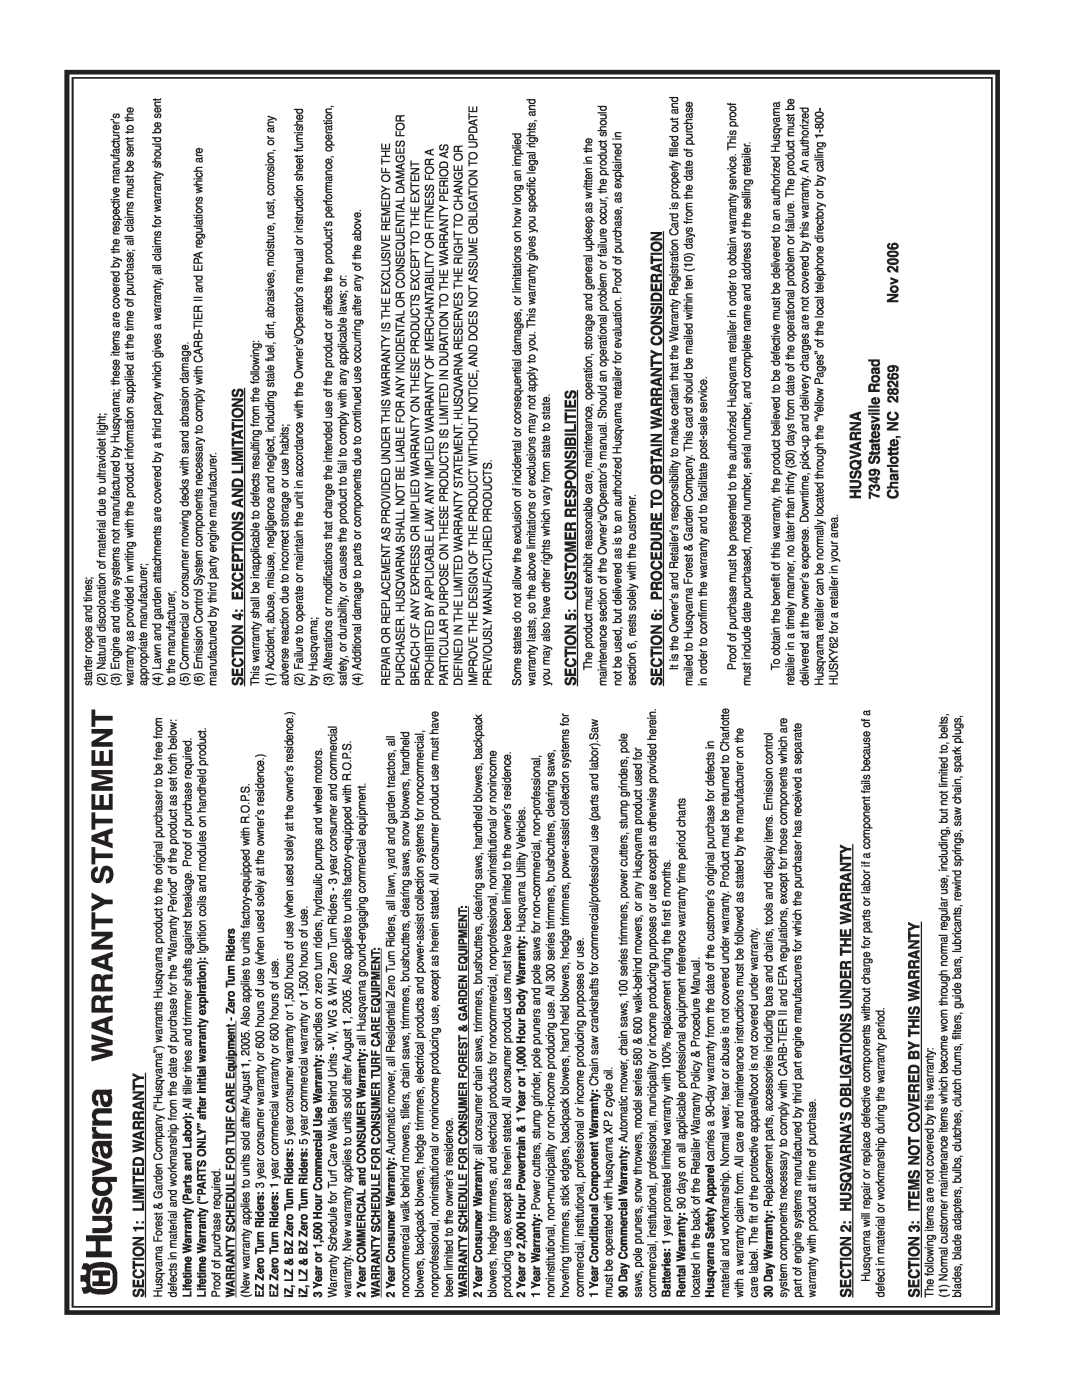 Husqvarna 7021P Warranty Statement, Charlotte, NC, WARRANTY SCHEDULE FOR TURF CARE Equipment - Zero Turn Riders 